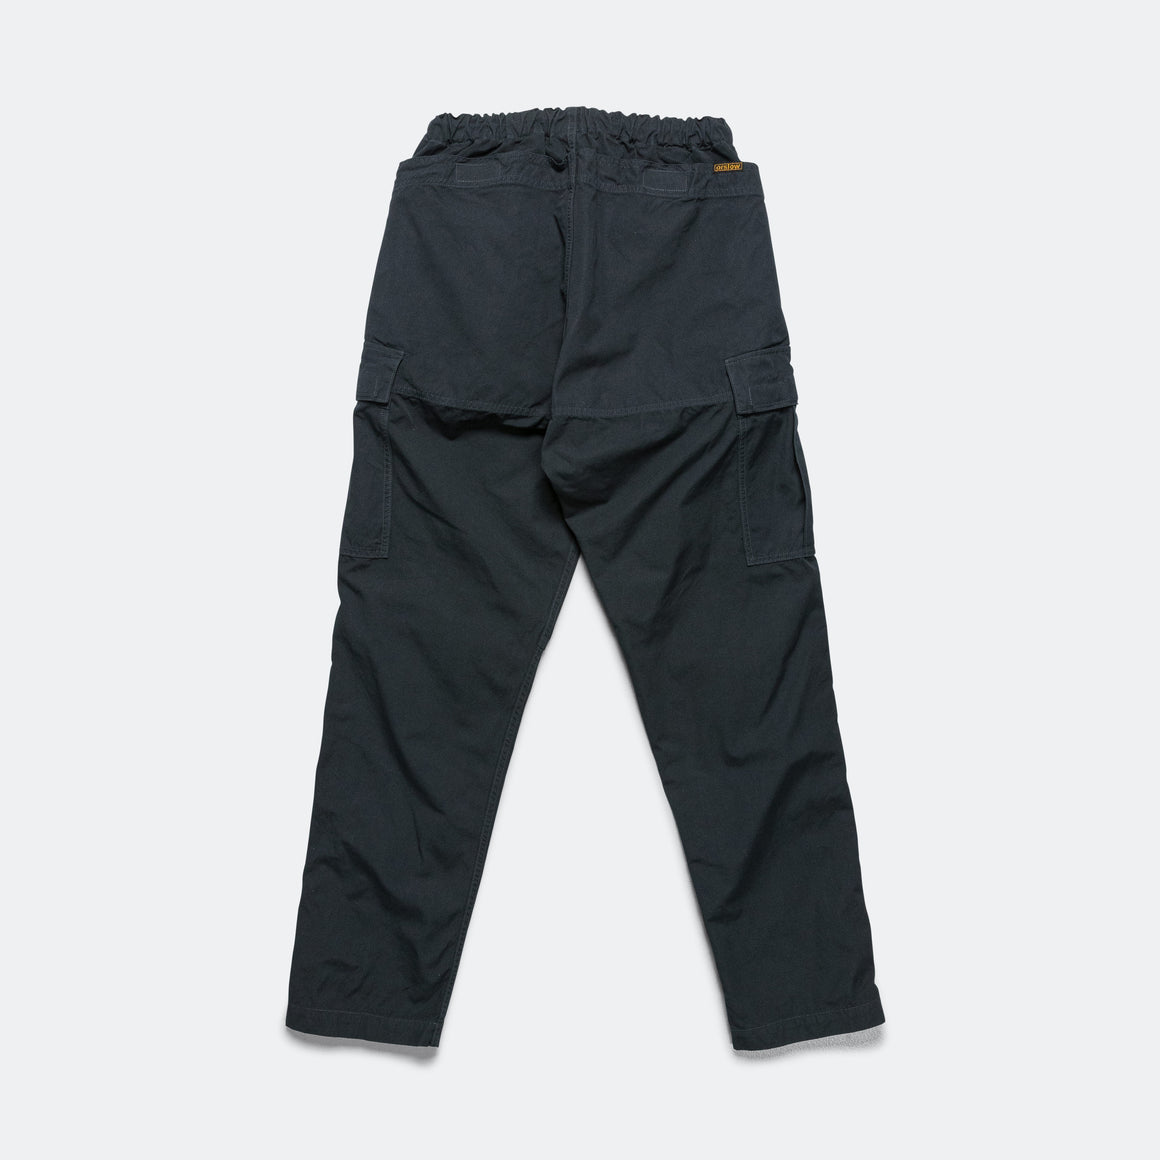 Easy Cargo Pants - Charcoal Gray